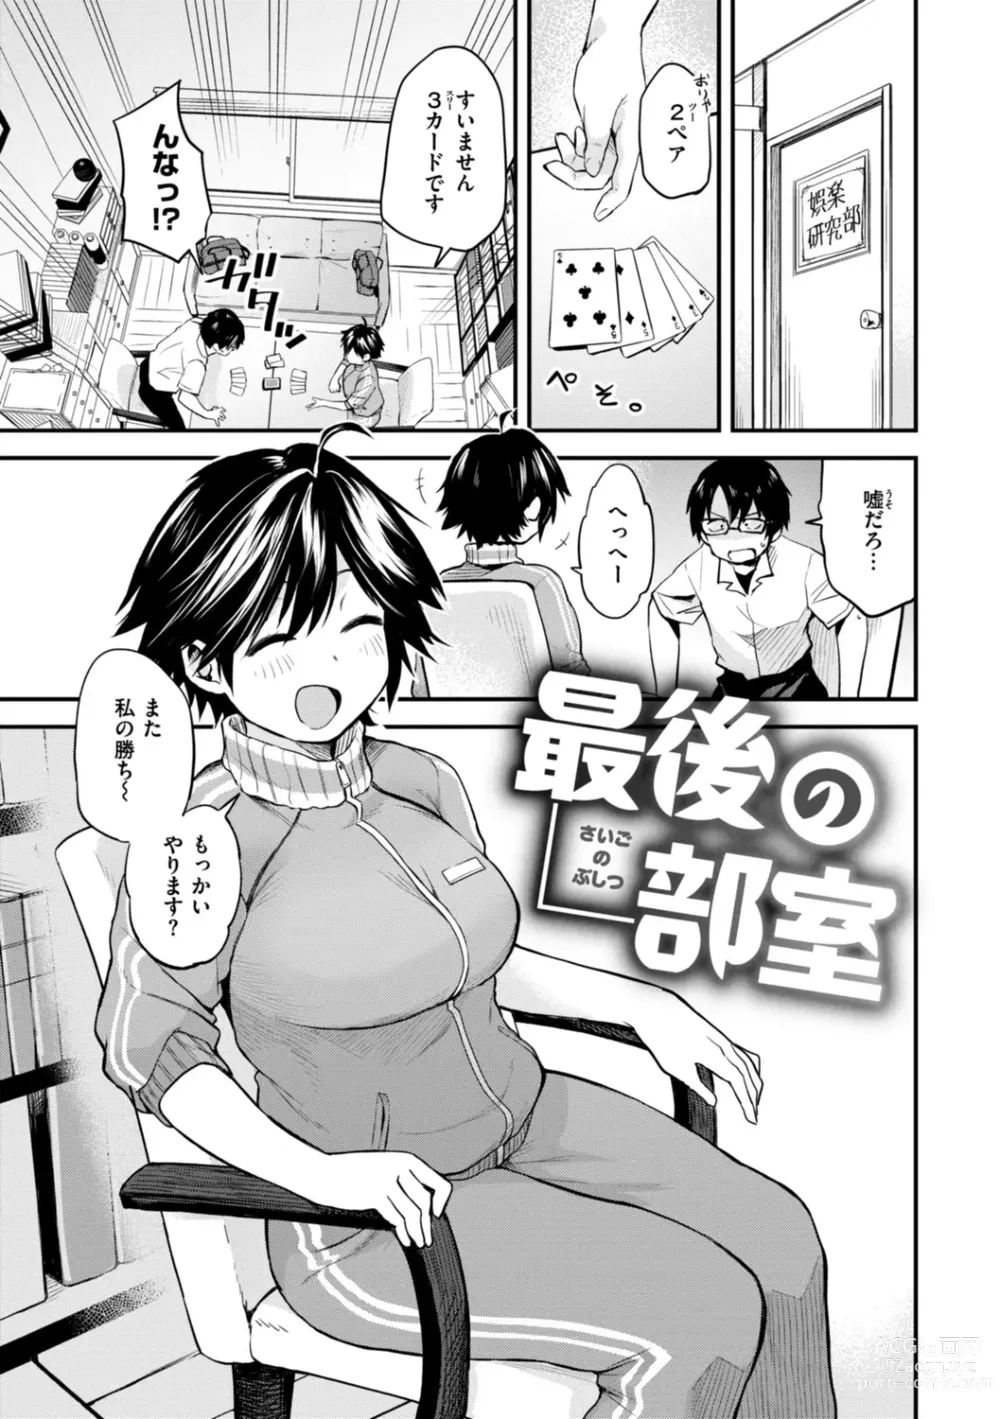 Page 37 of manga Jaa, Ecchi Shichau? - Shall we have H then?